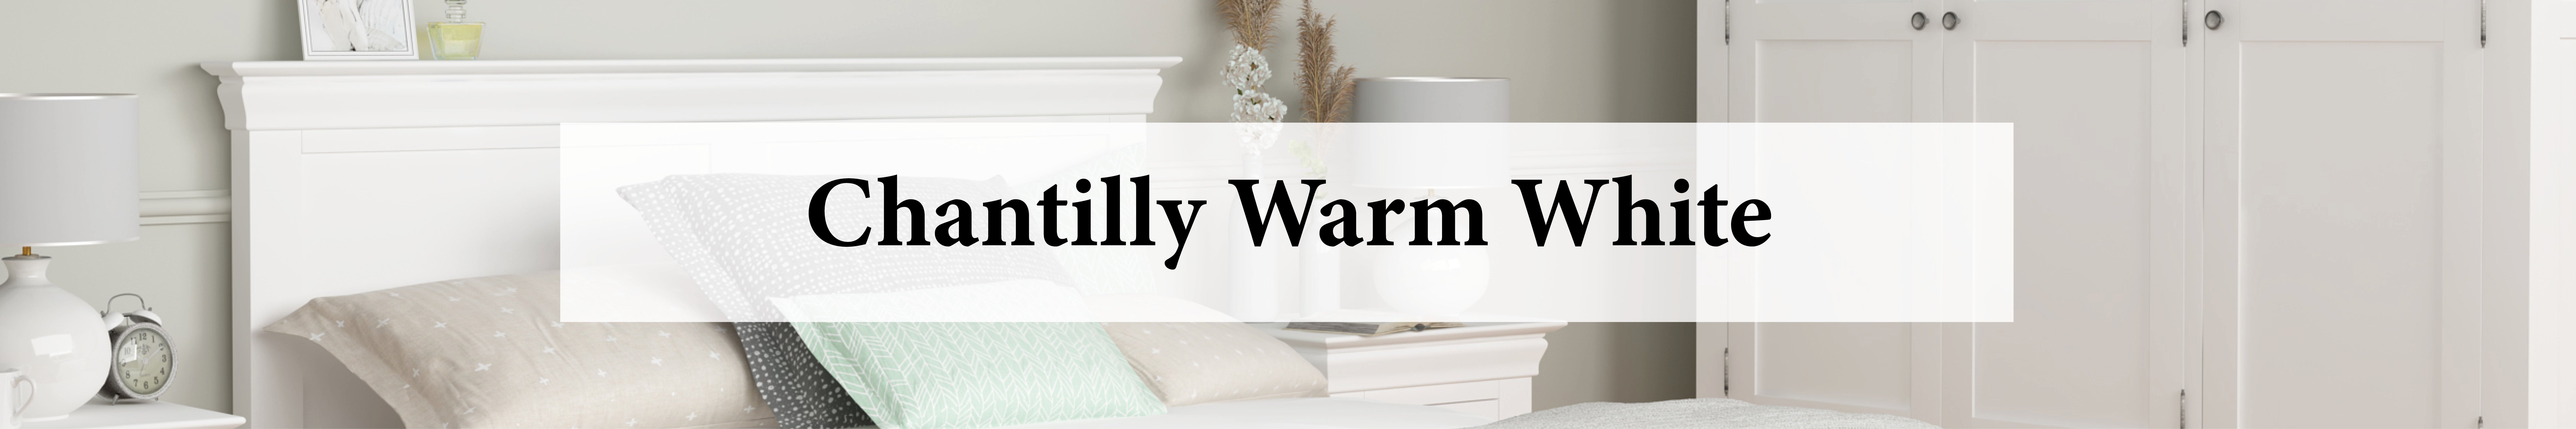 HomePlus Furniture | Chantilly Warm White